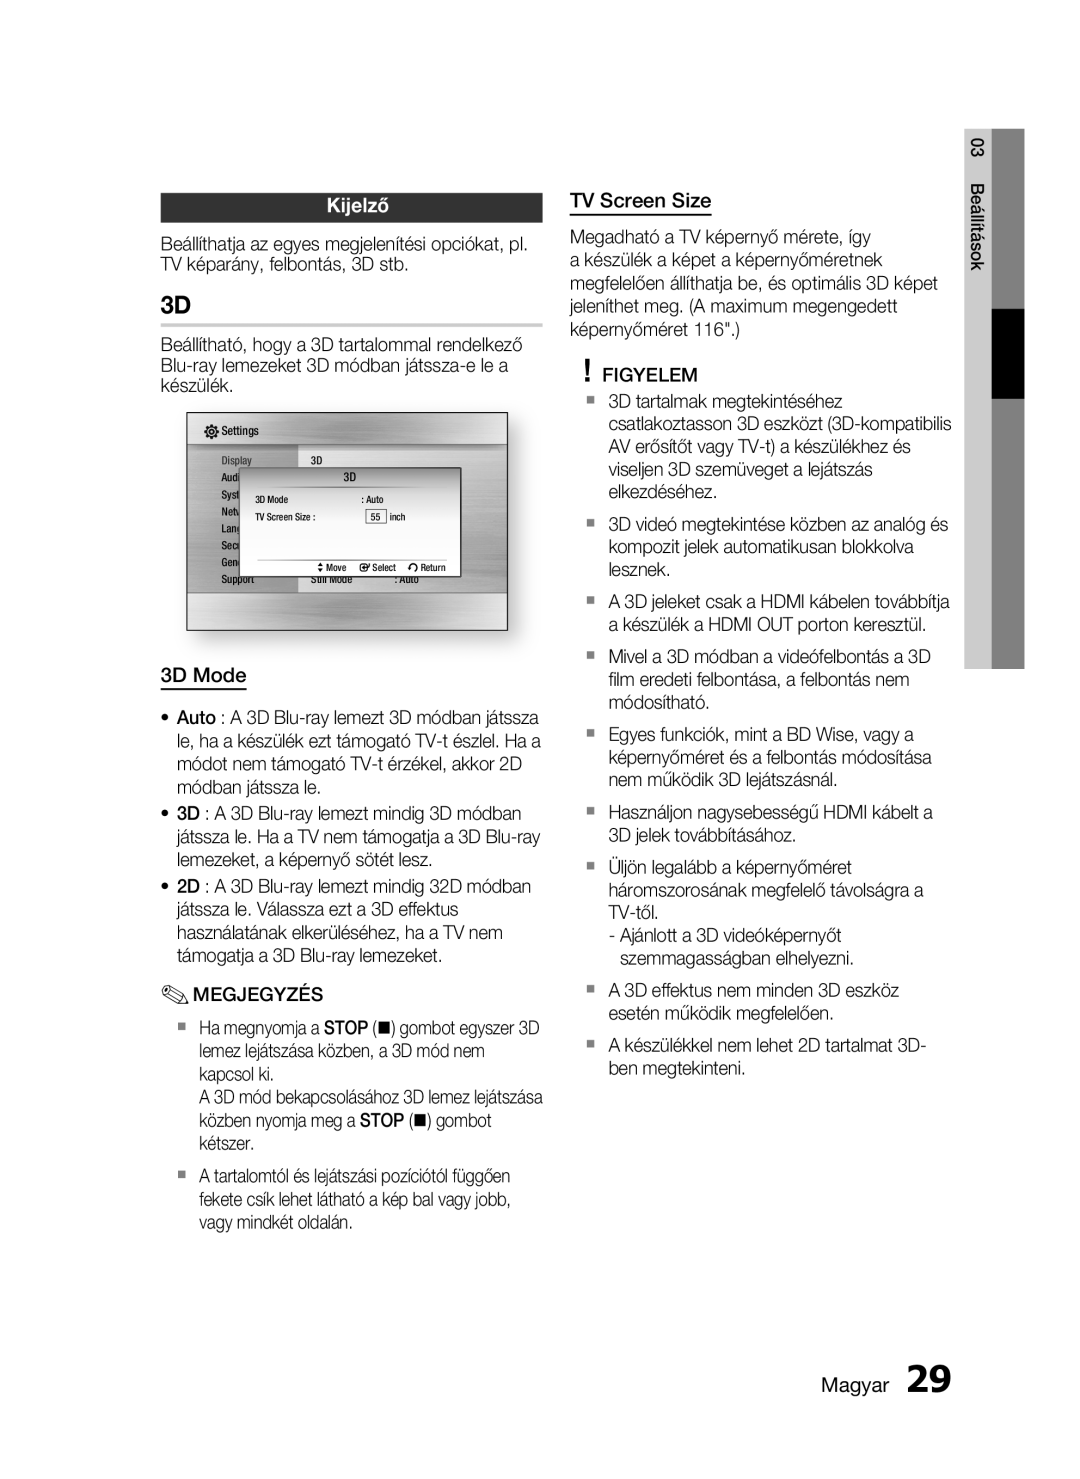 Samsung HT-C5900/XEE, HT-C5900/XEF manual Kijelző, 3D Mode, TV Screen Size, Magyar 